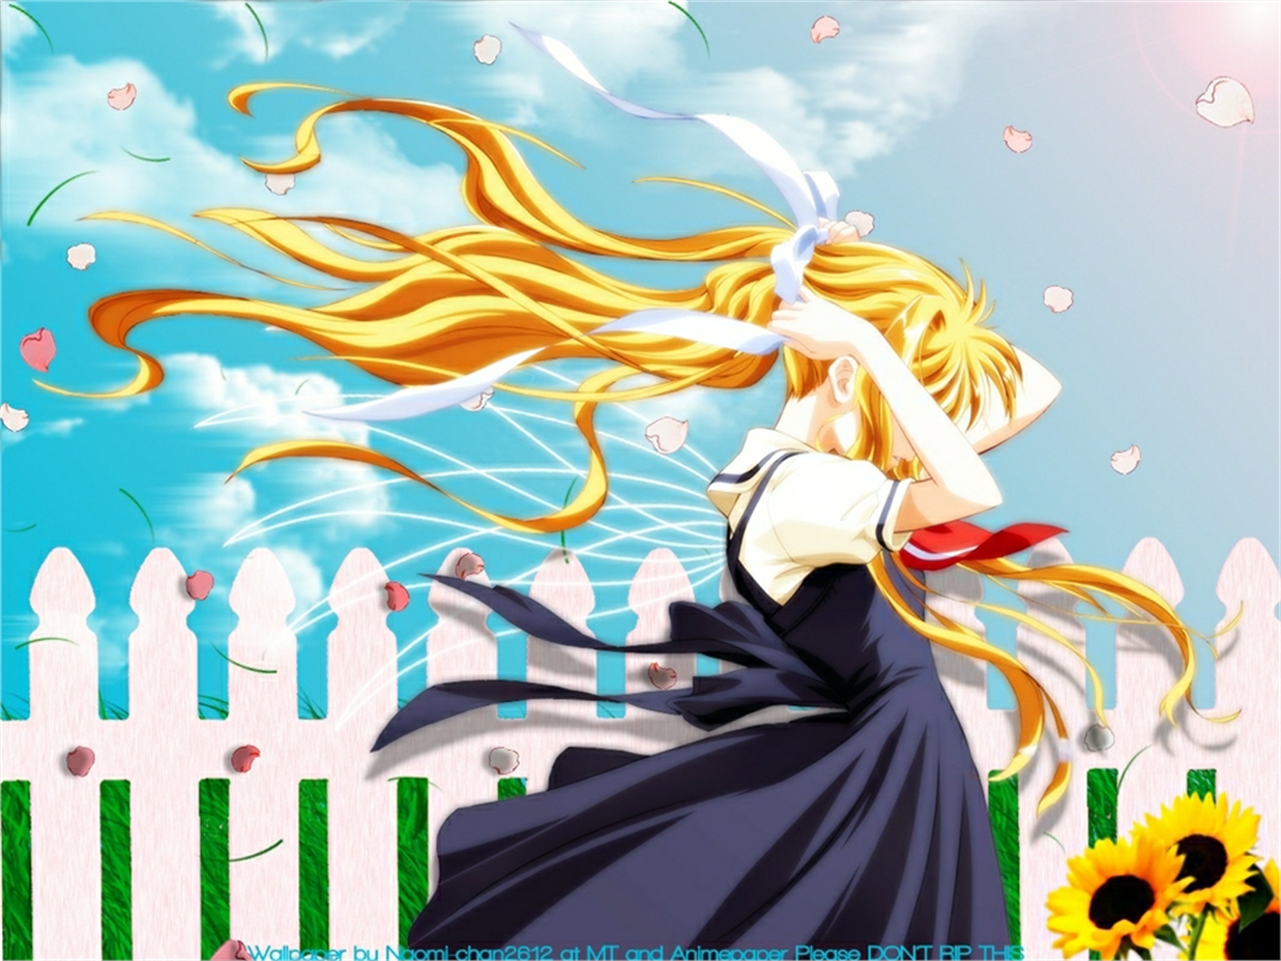 Free download wallpaper Anime, Air, Misuzu Kamio on your PC desktop